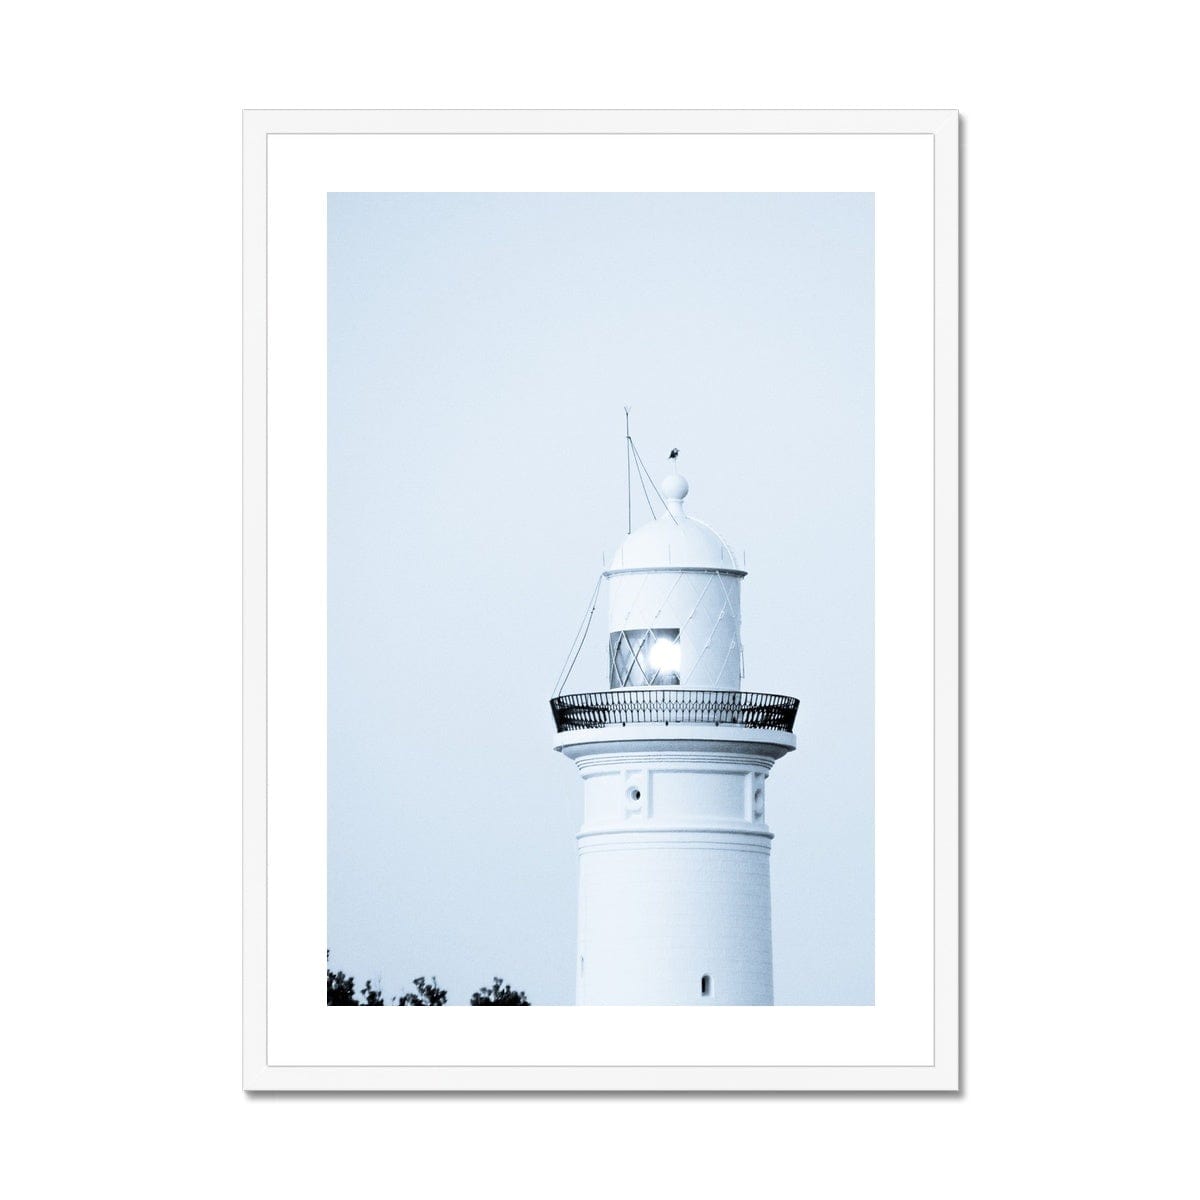 Adam Davies Framed 16"x20" (40.64x50.8cm) / White Frame Macquarie Lighthouse Sydney Framed Print